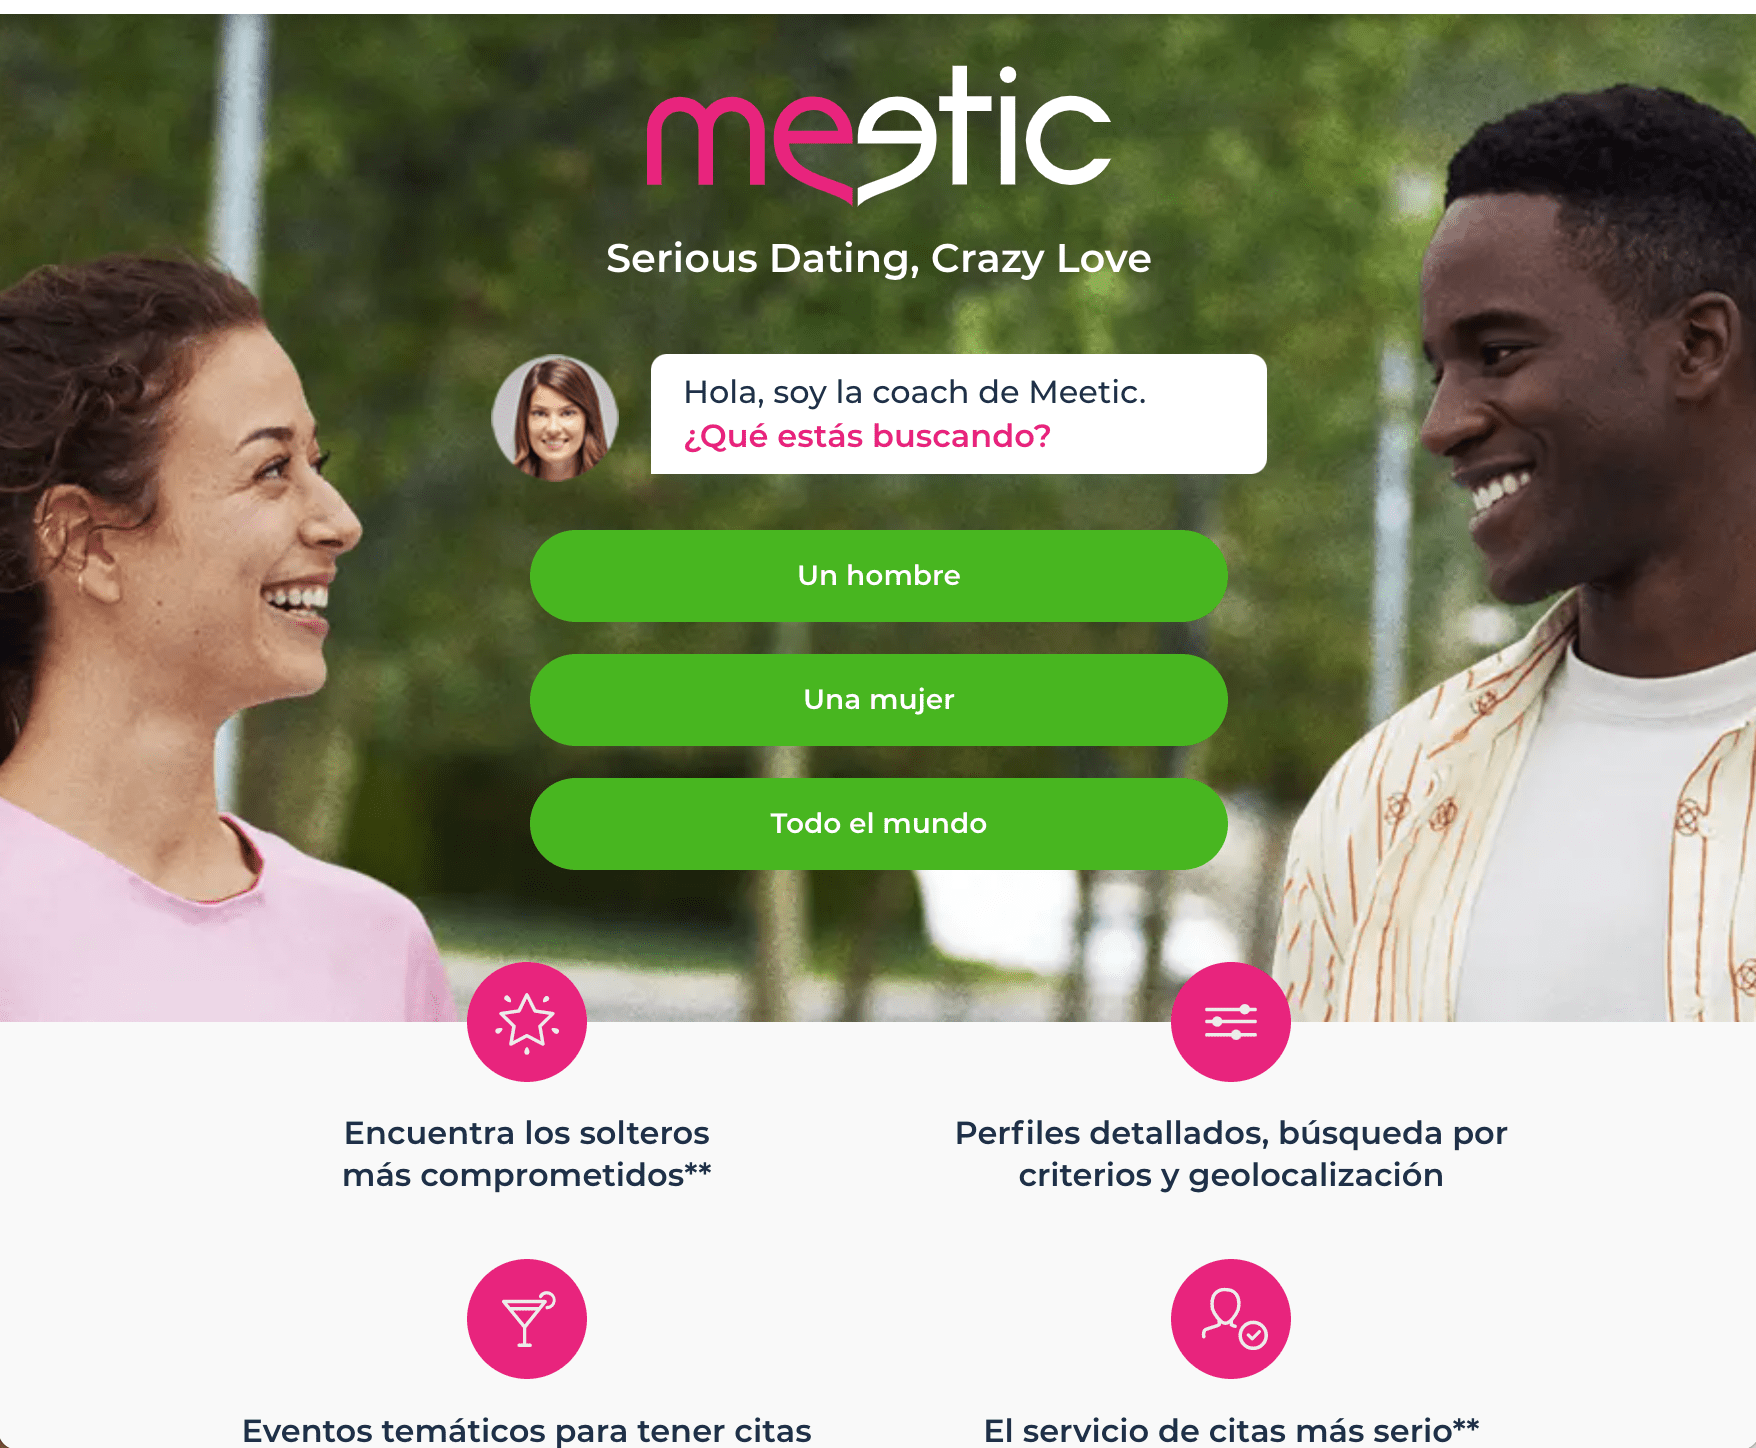 Meetic is Spain´s Match.com- Joanna Rubio Spanish voice over